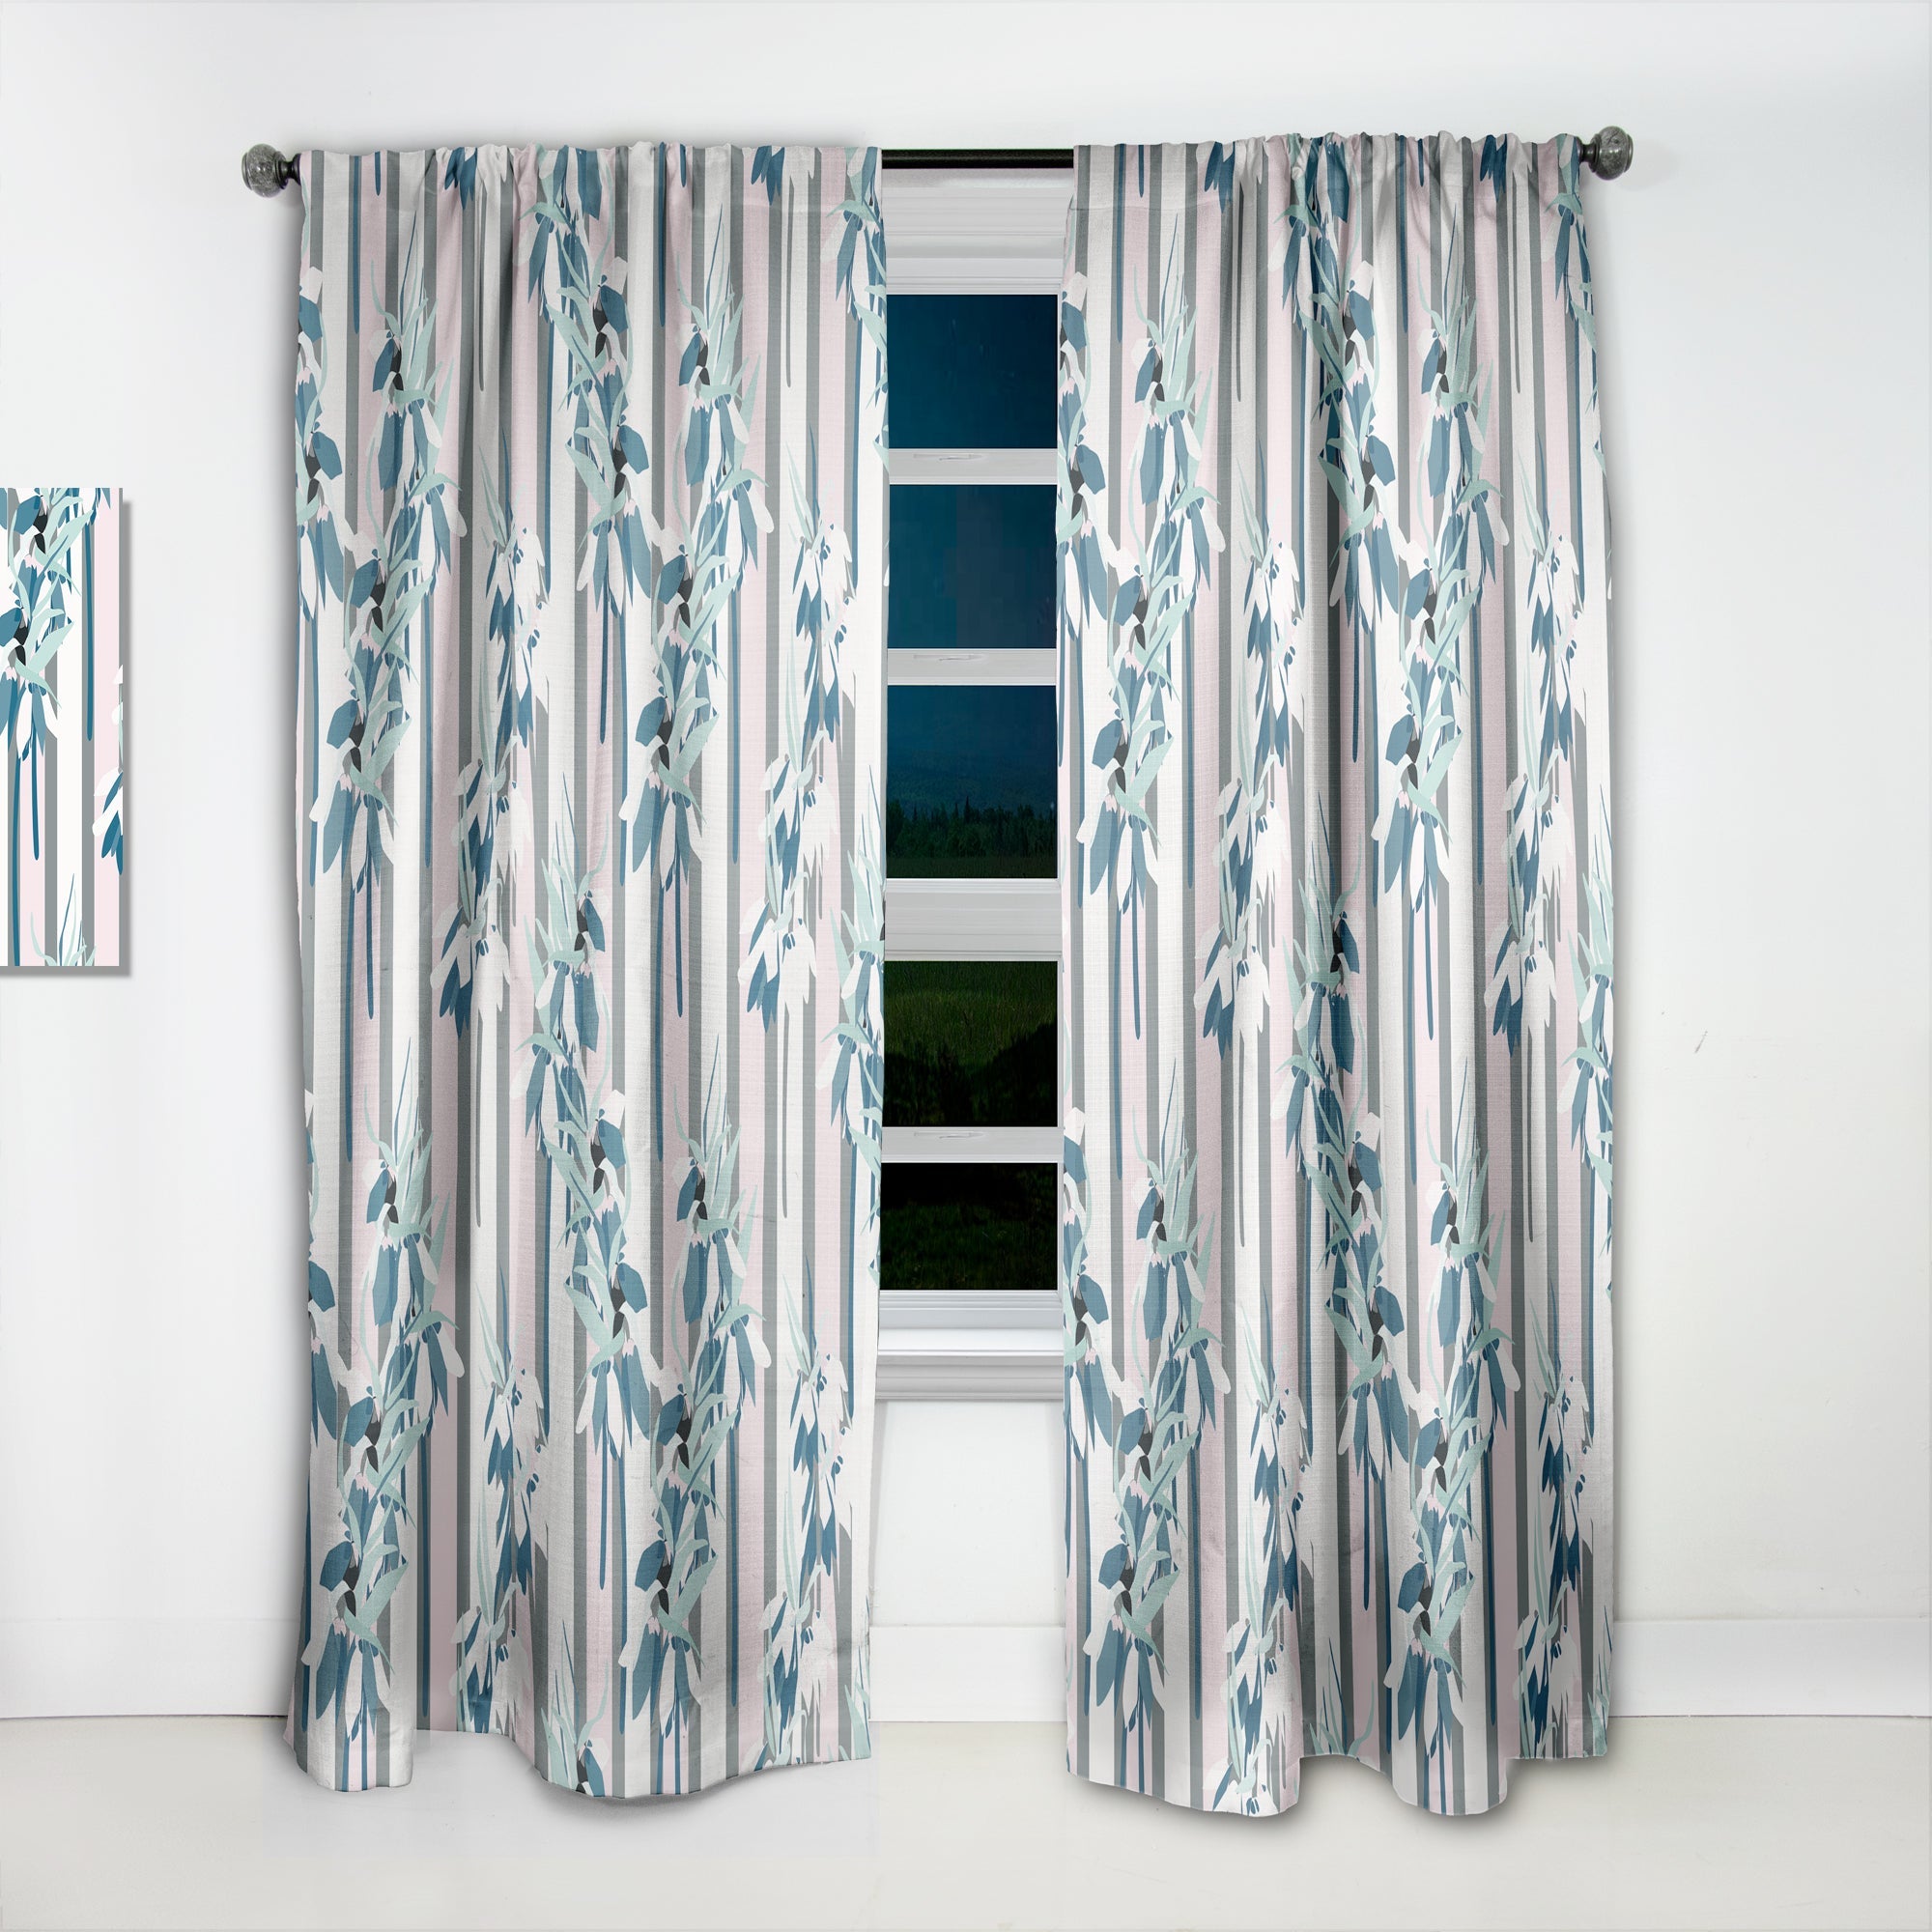 Retro Handdrawn Lilies' Mid-Century Modern Curtain Panel